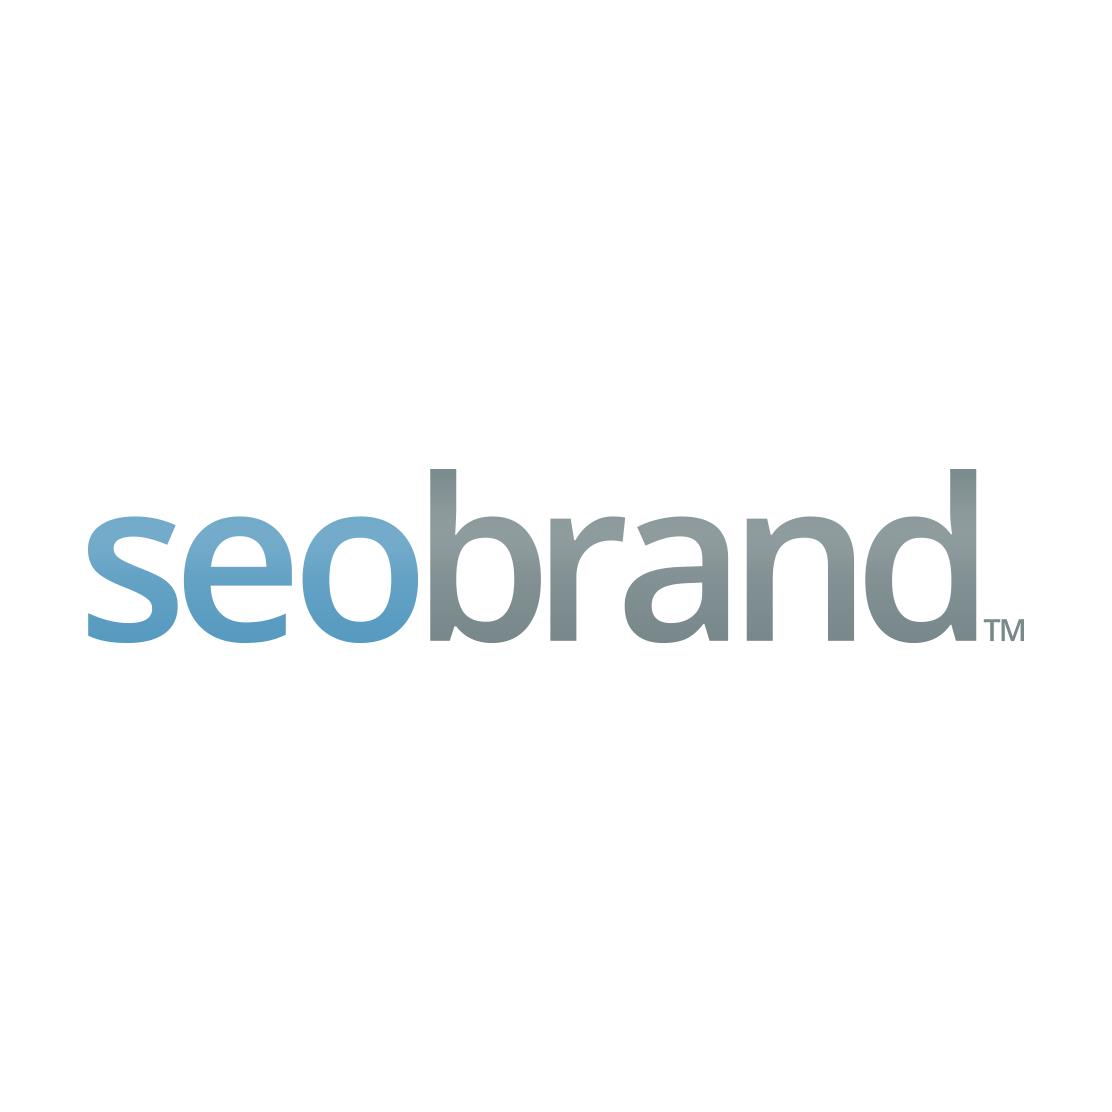 Best SMM Firm Logo: SEO Brand